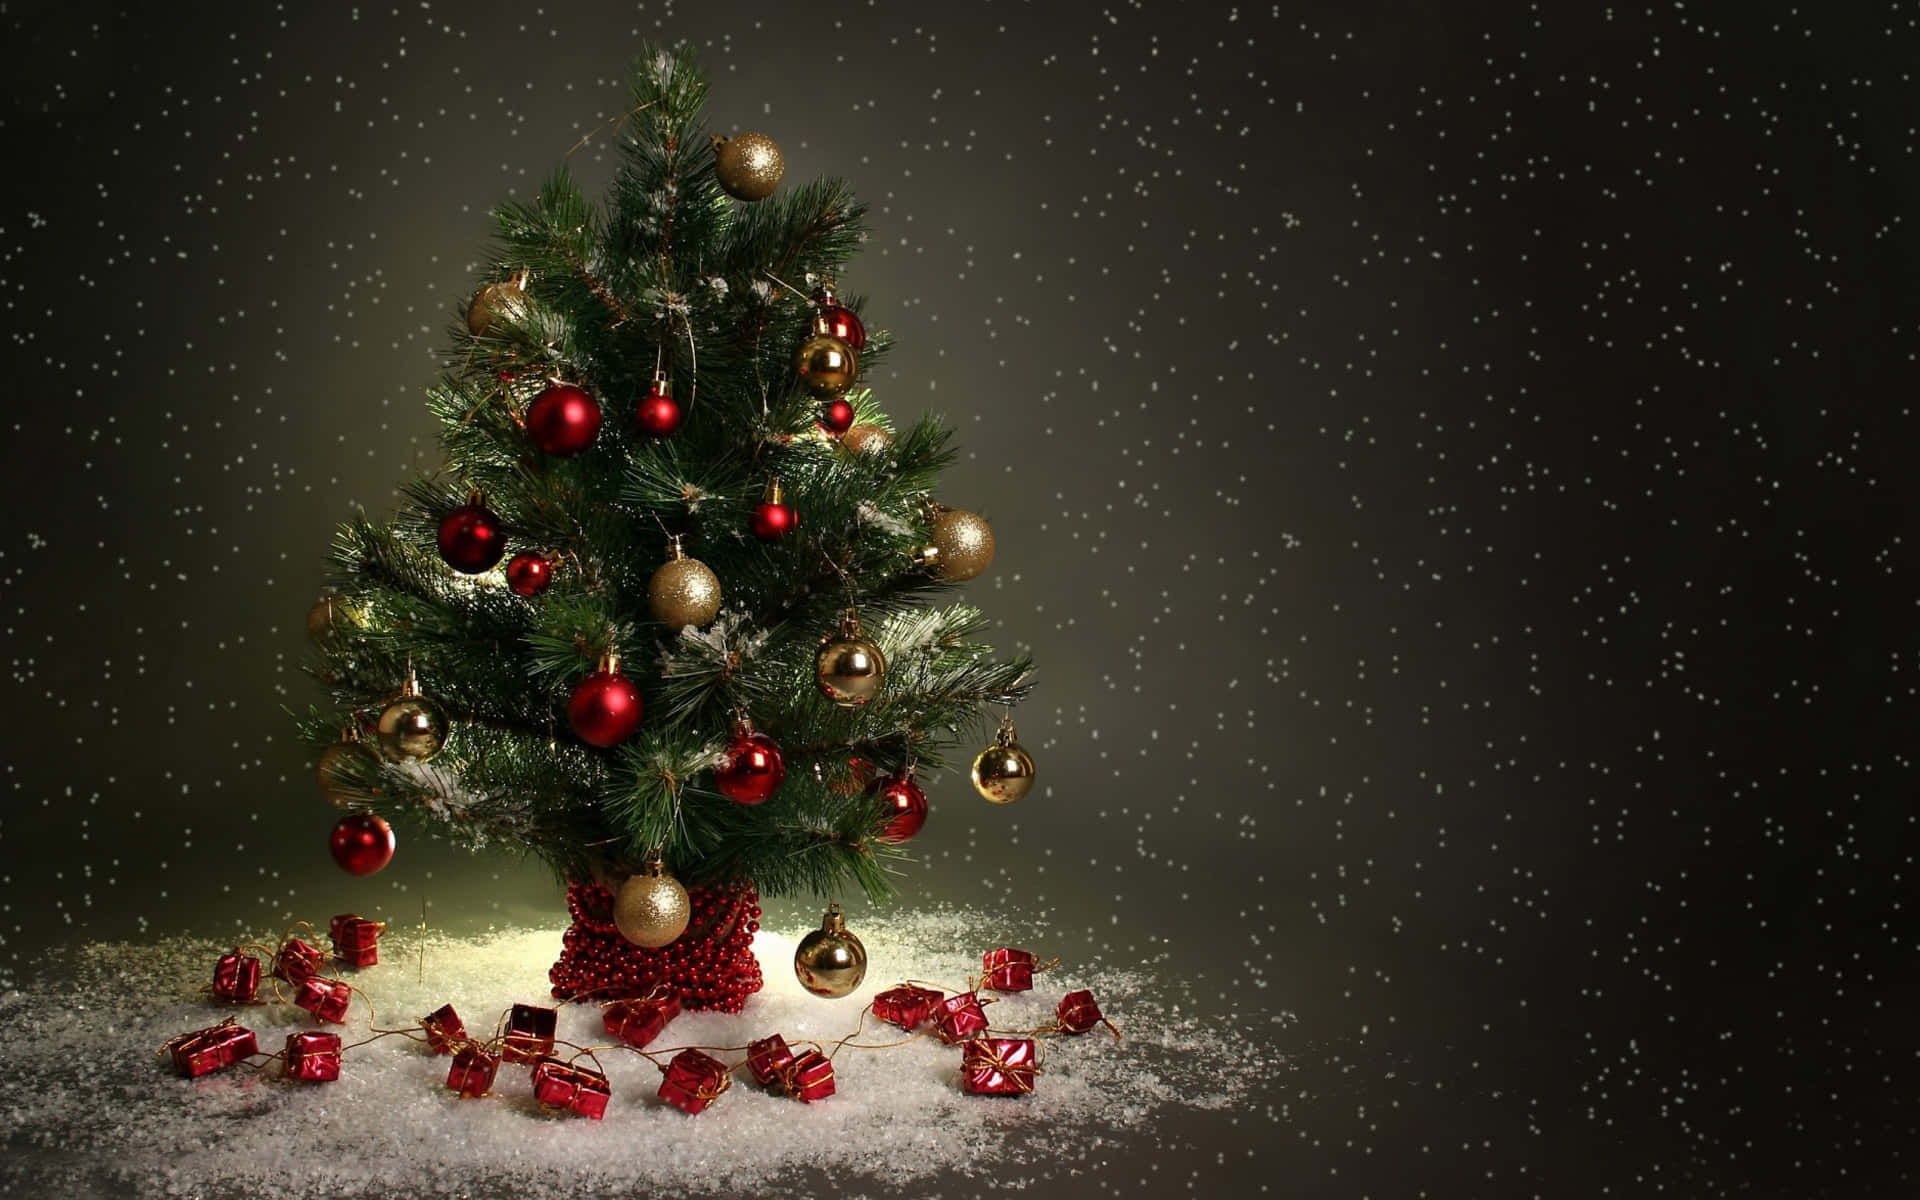 Festive Christmas Tree With Giftsand Snowfall Wallpaper